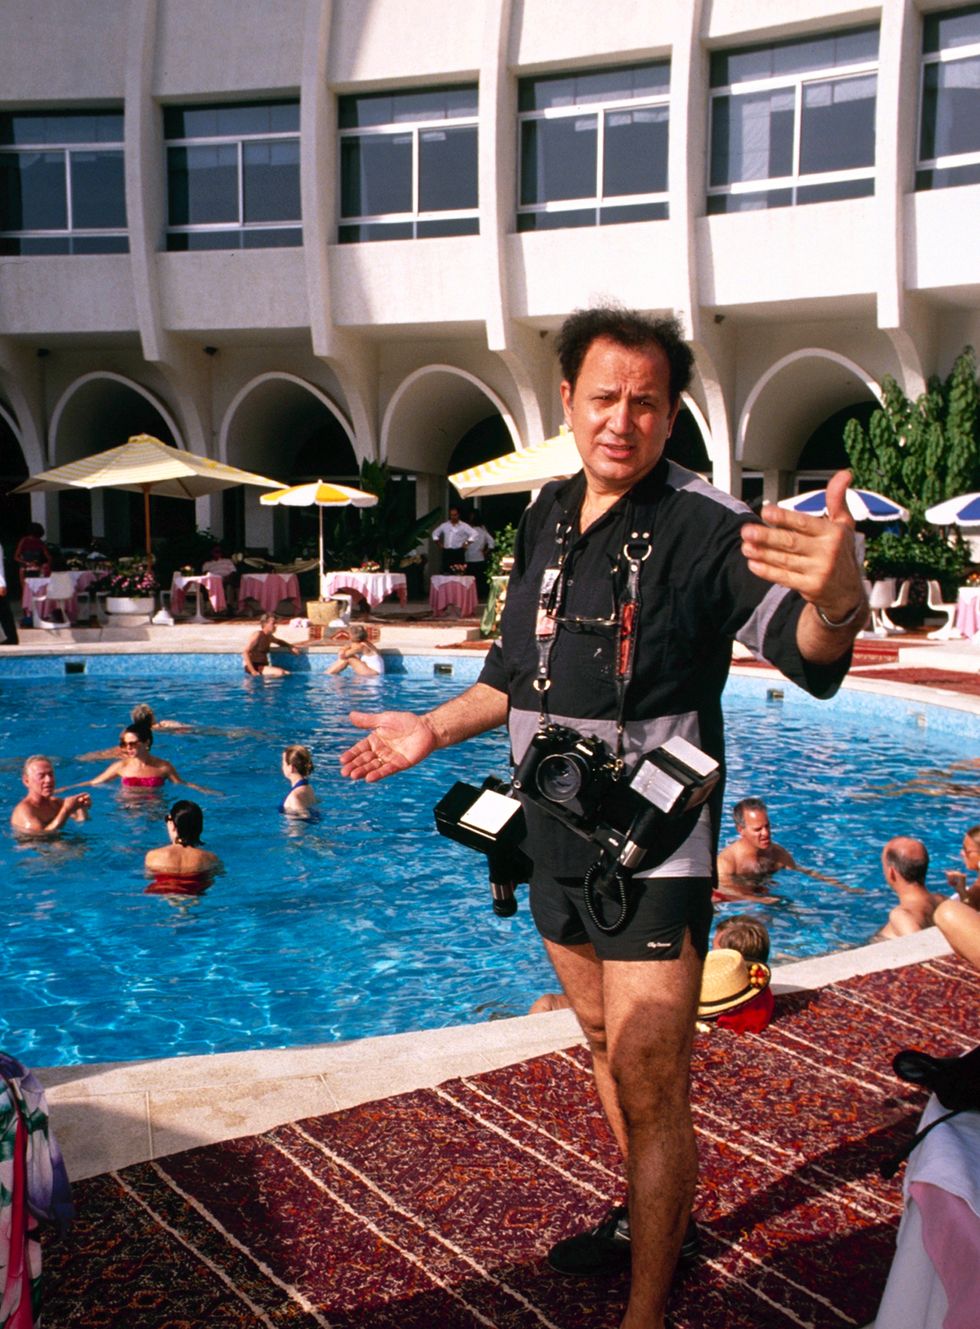 paparazzi photographer ron galella in 1990